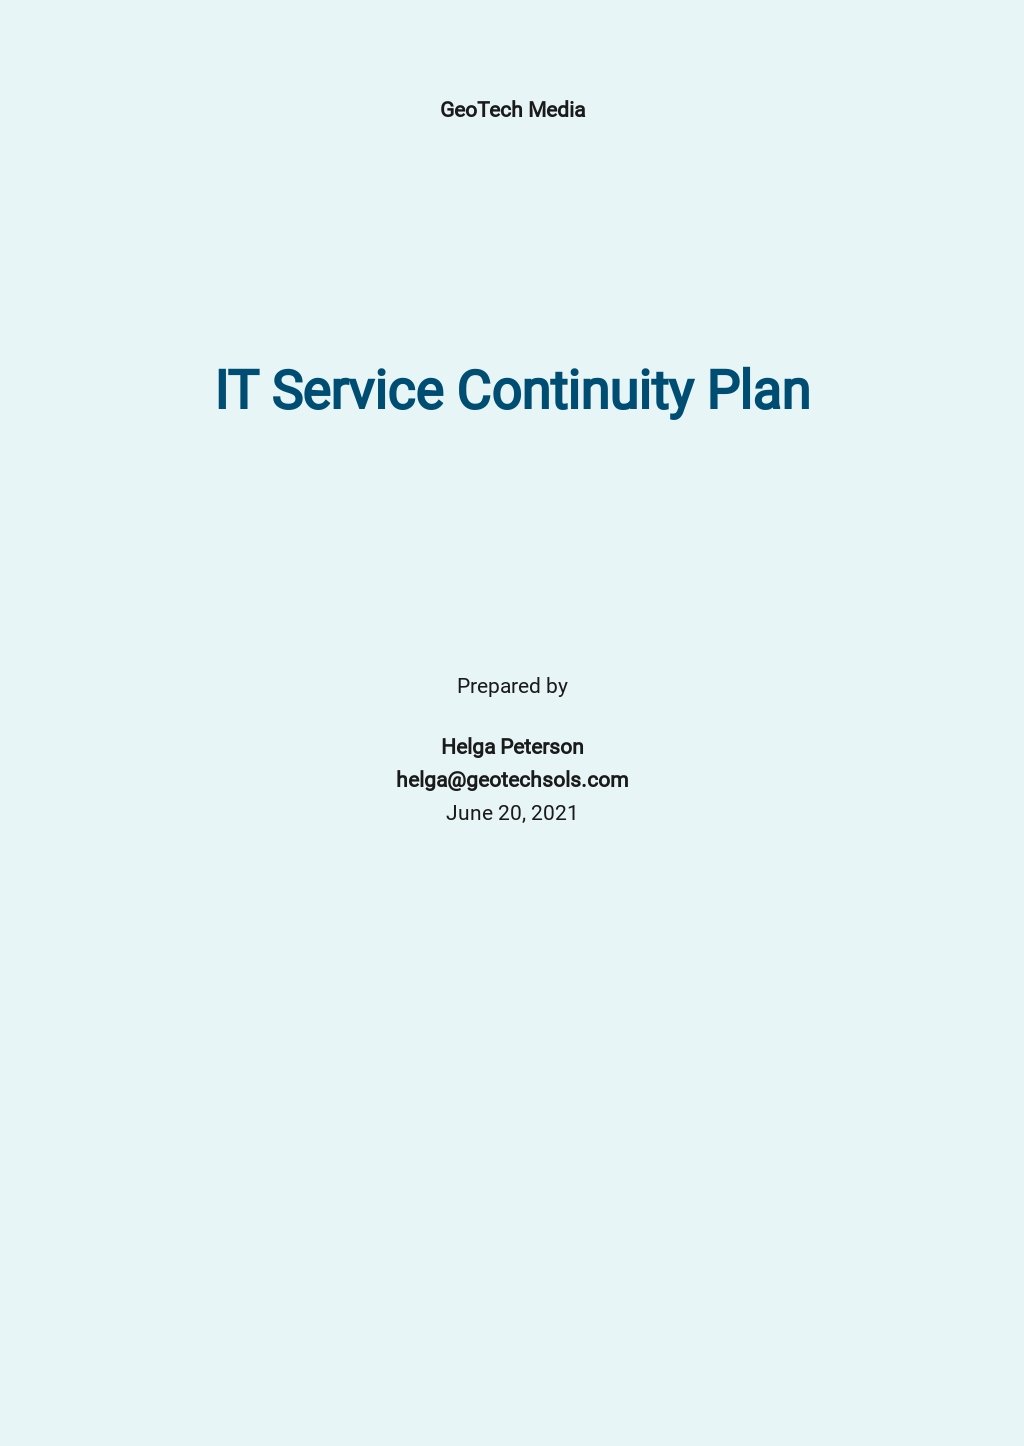 IT Service Continuity Plan Template.jpe